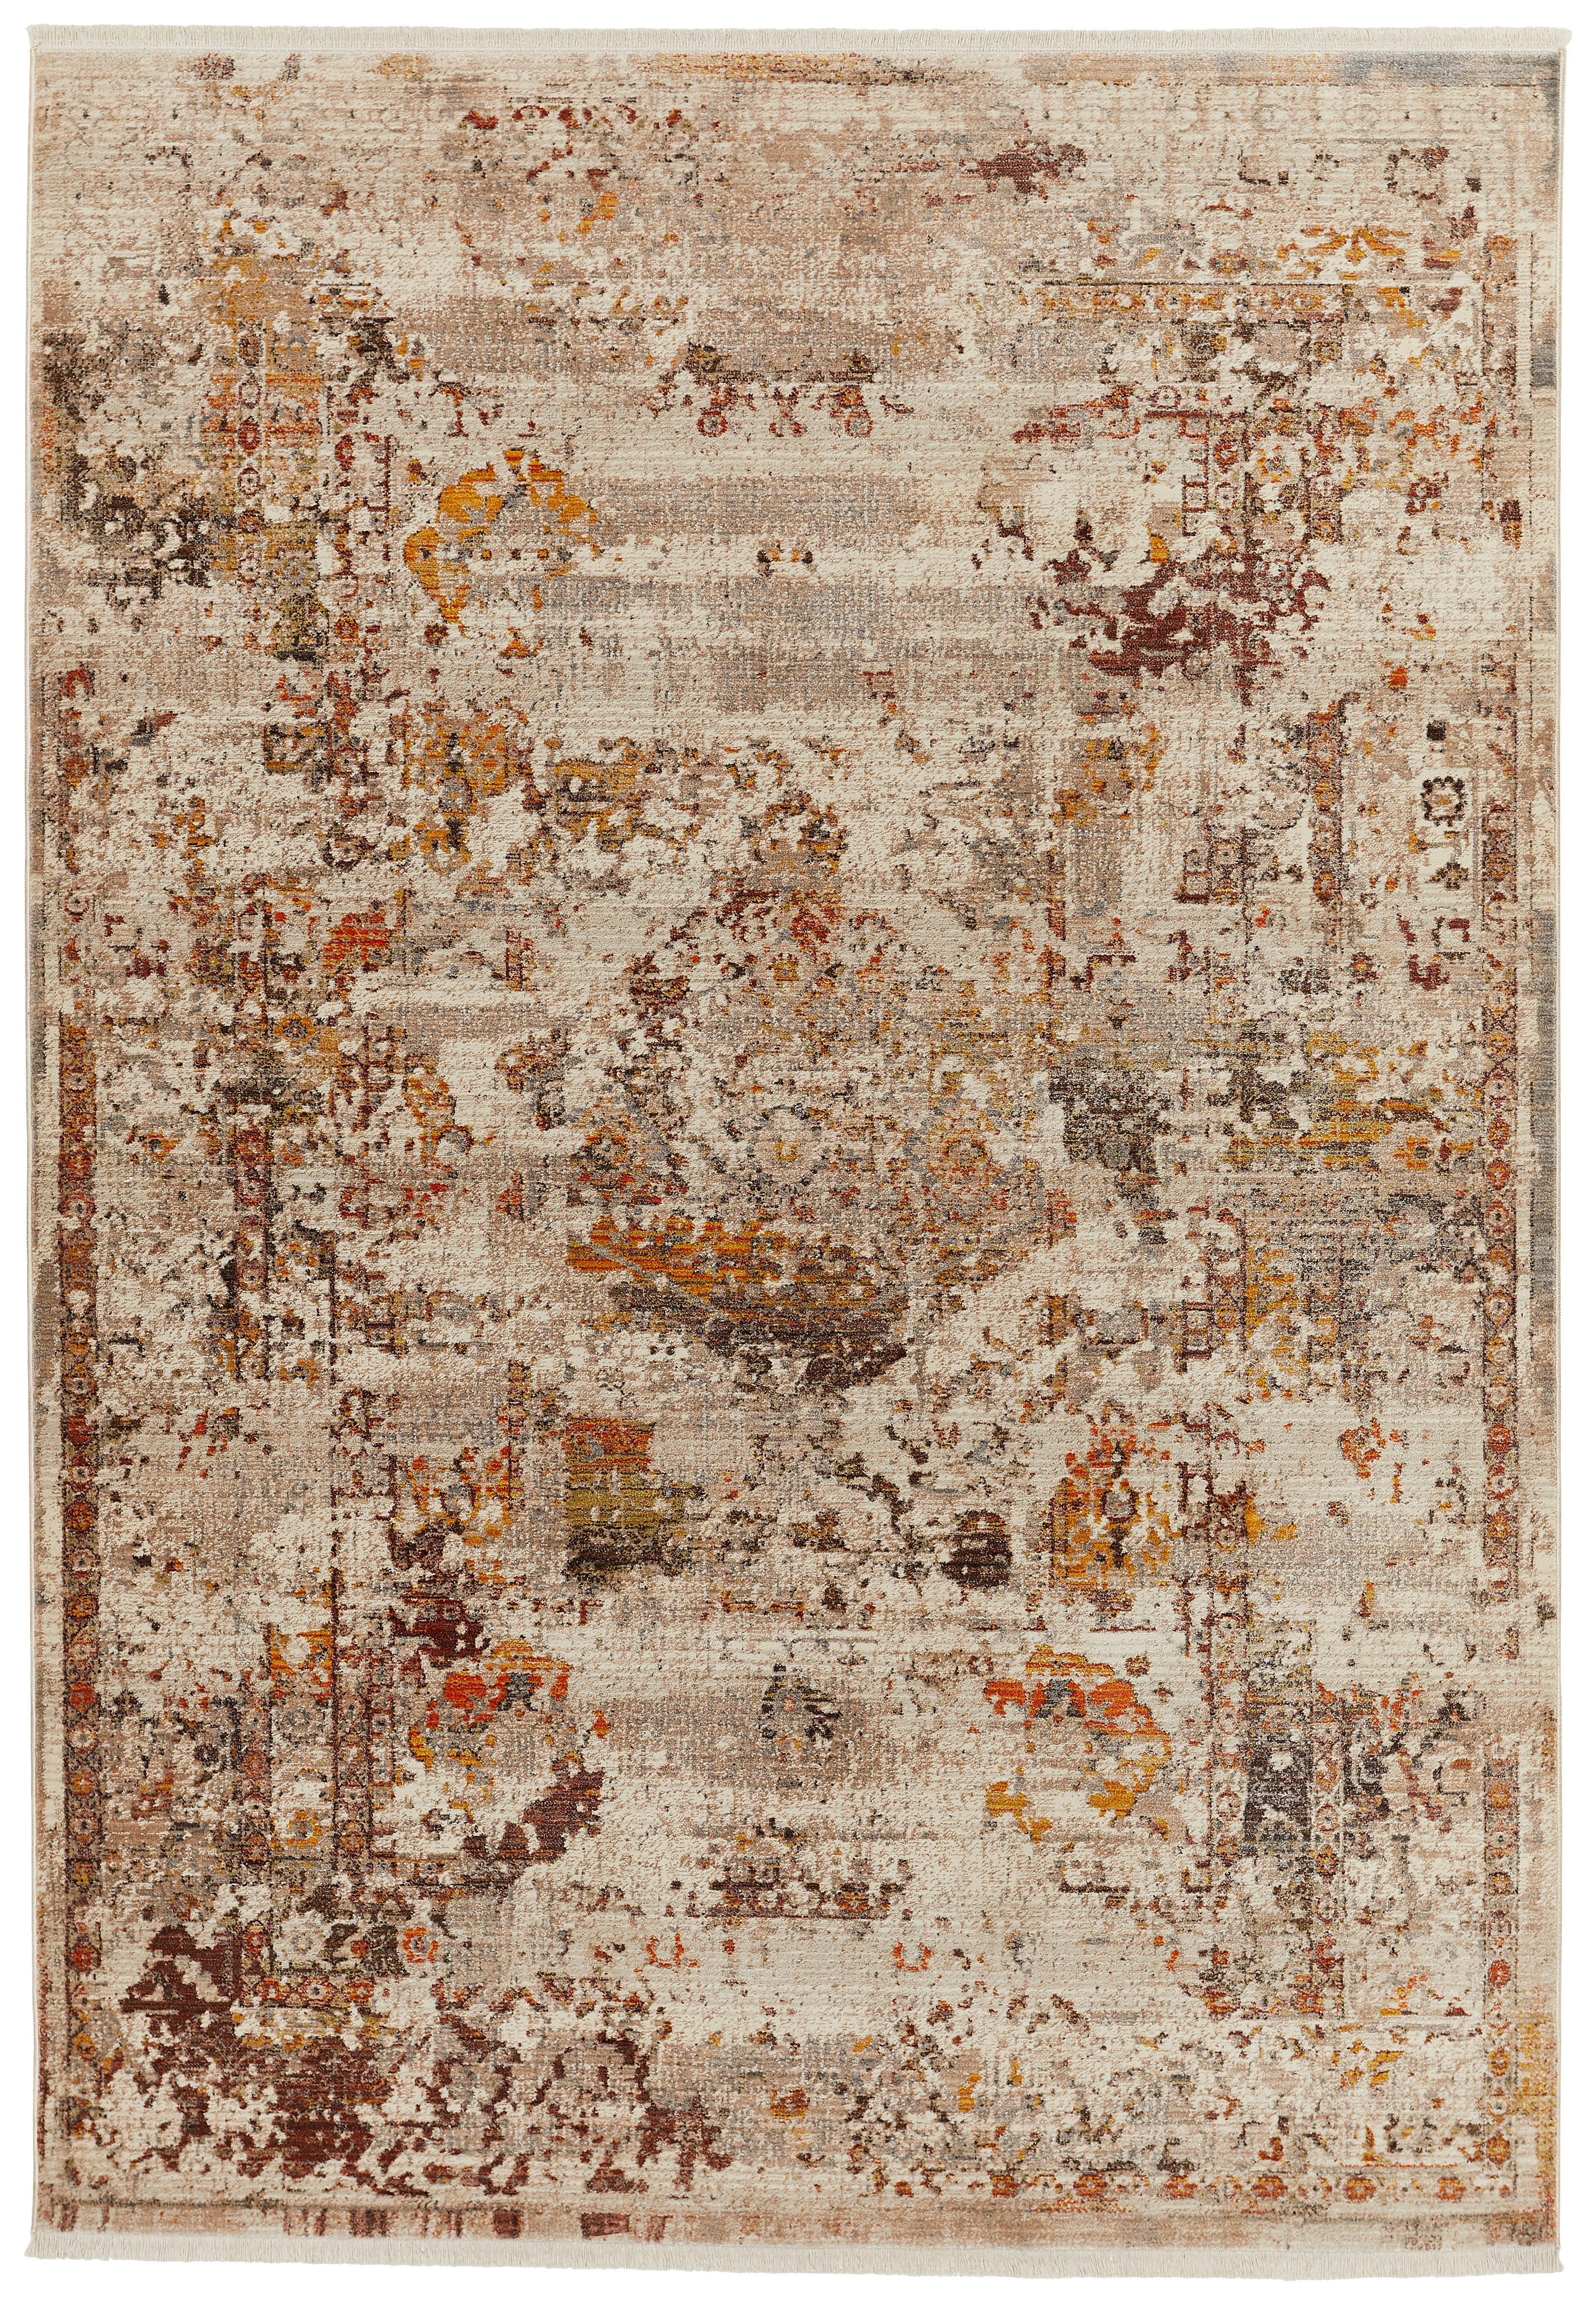 VINTAGE-TEPPICH Samarkand 120/153 cm  - Multicolor/Creme, LIFESTYLE, Textil (120/153cm) - Novel